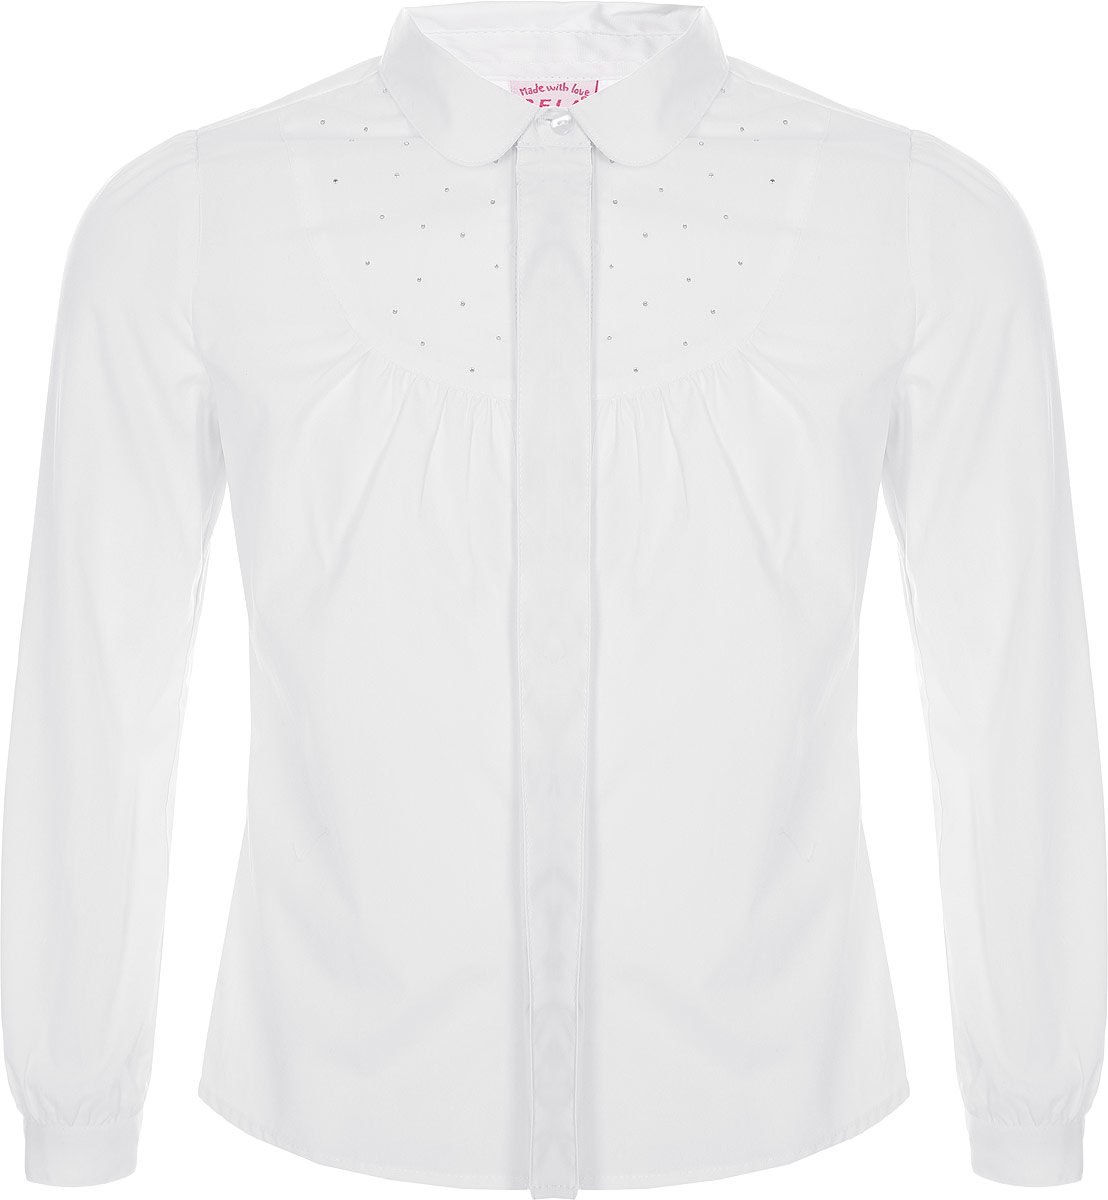 Блузка для девочки Sela, цвет: белый. B-612/1008-8310. Размер 134